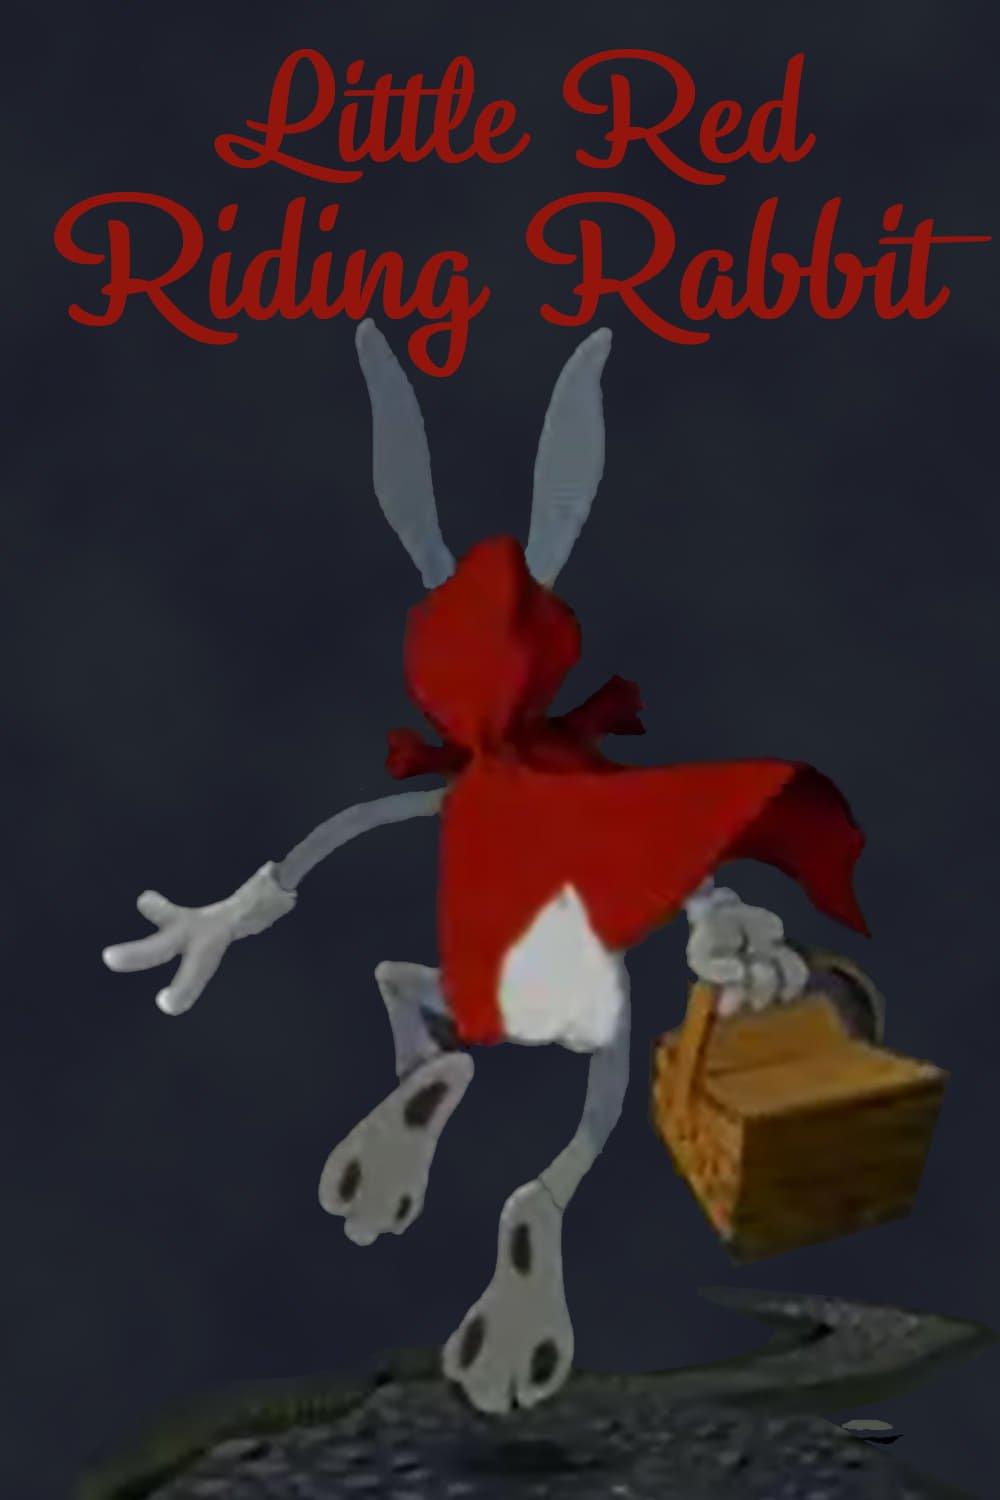 Little Red Riding Rabbit (1944)